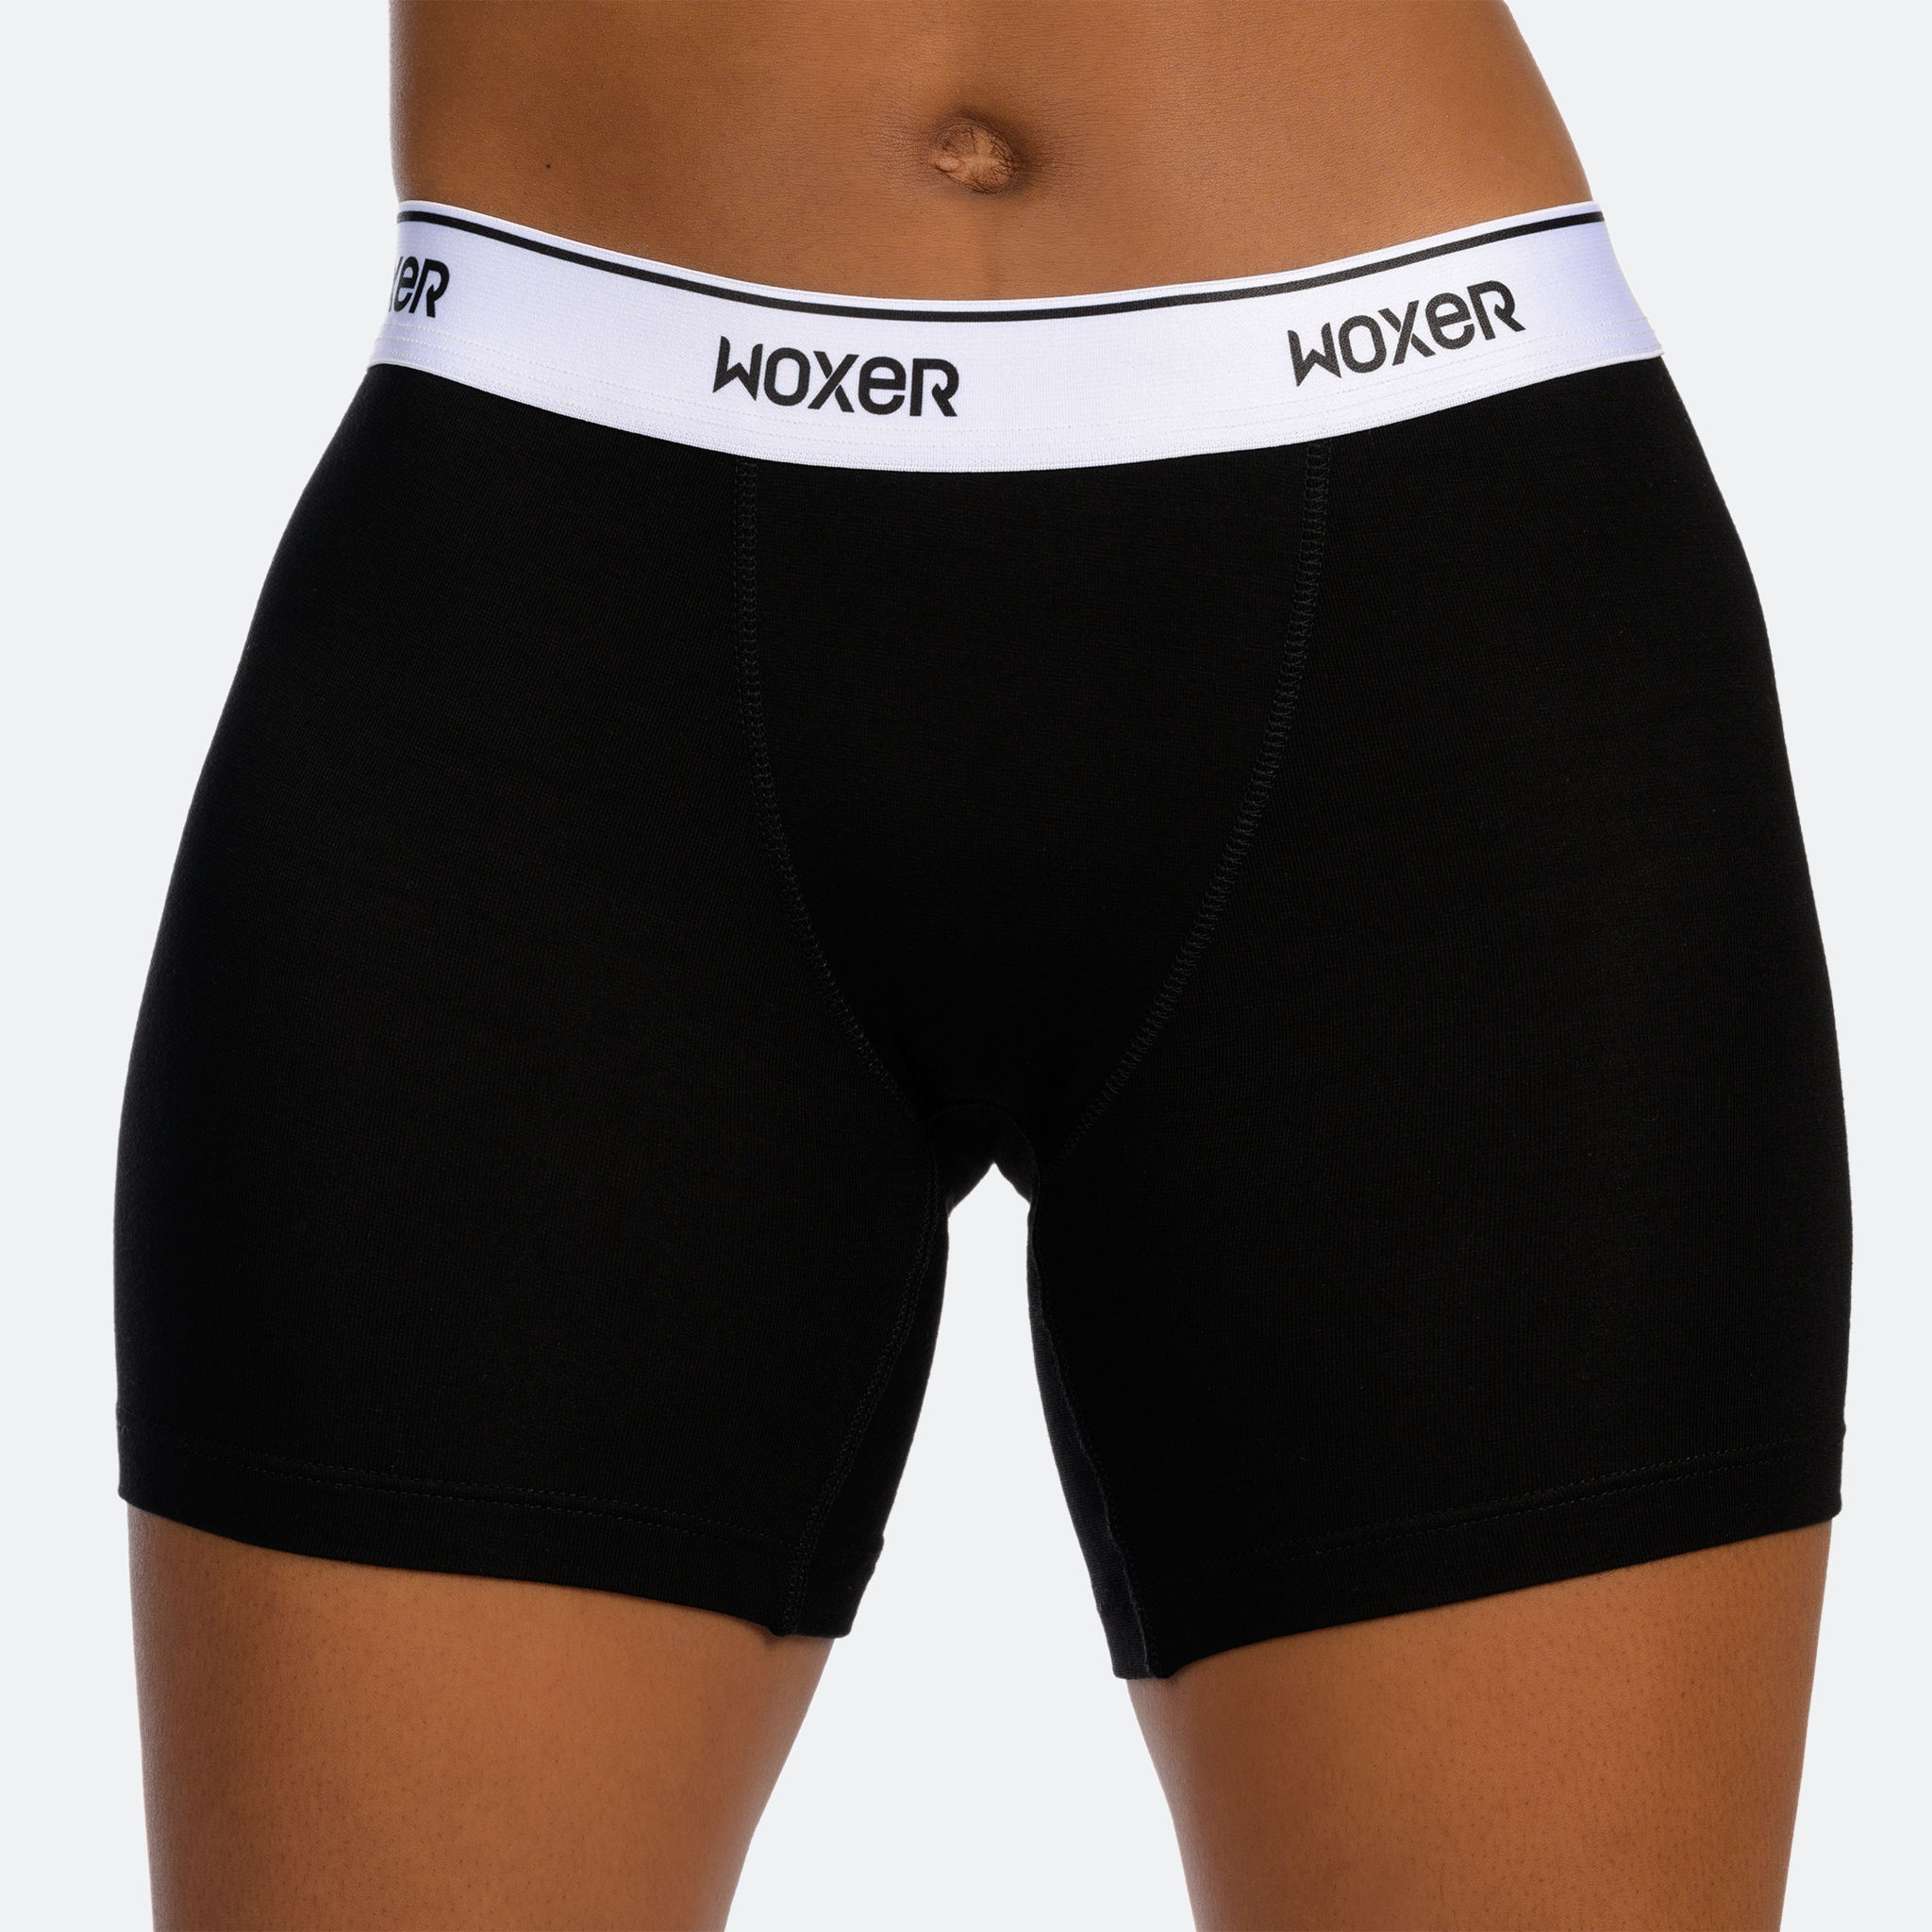 Boxer\'s Boy Black Shorts & | Baller Women\'s Woxer |